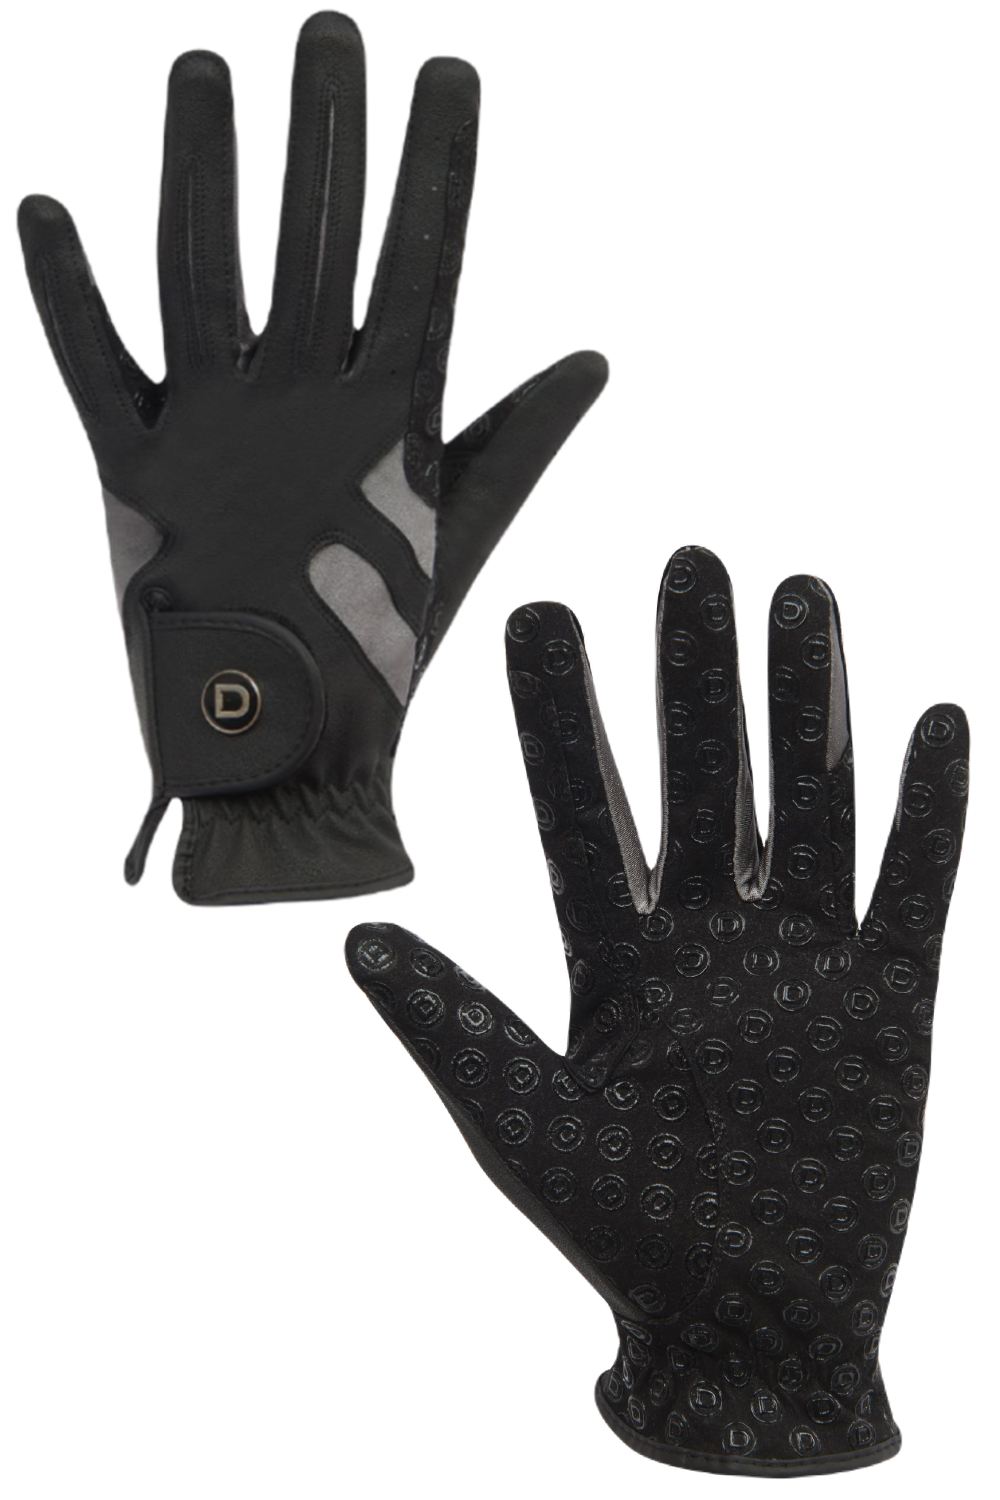 Dublin Cool-It Gel Riding Gloves In Black/Grey 